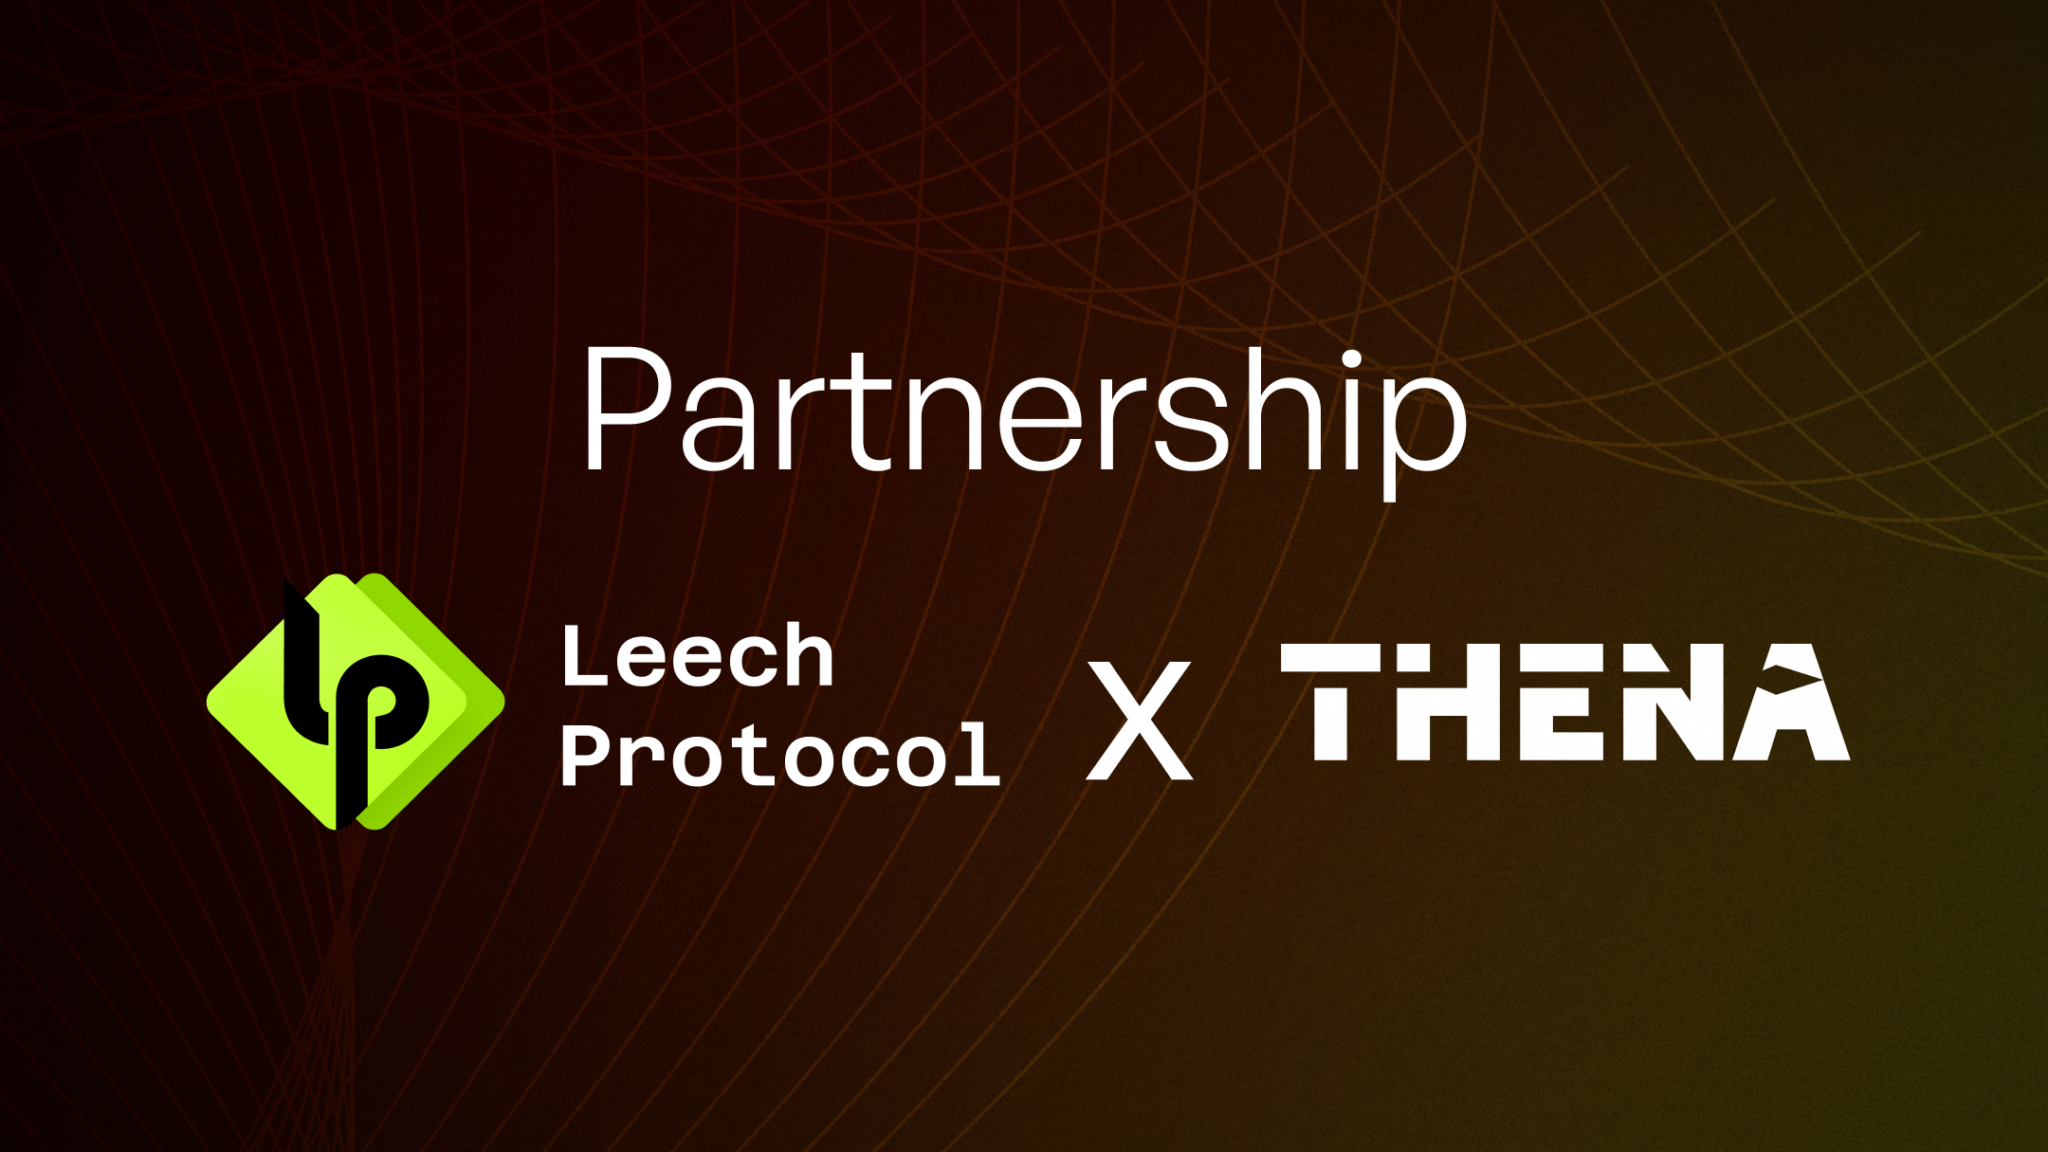 Leech Protocol partners with THENA